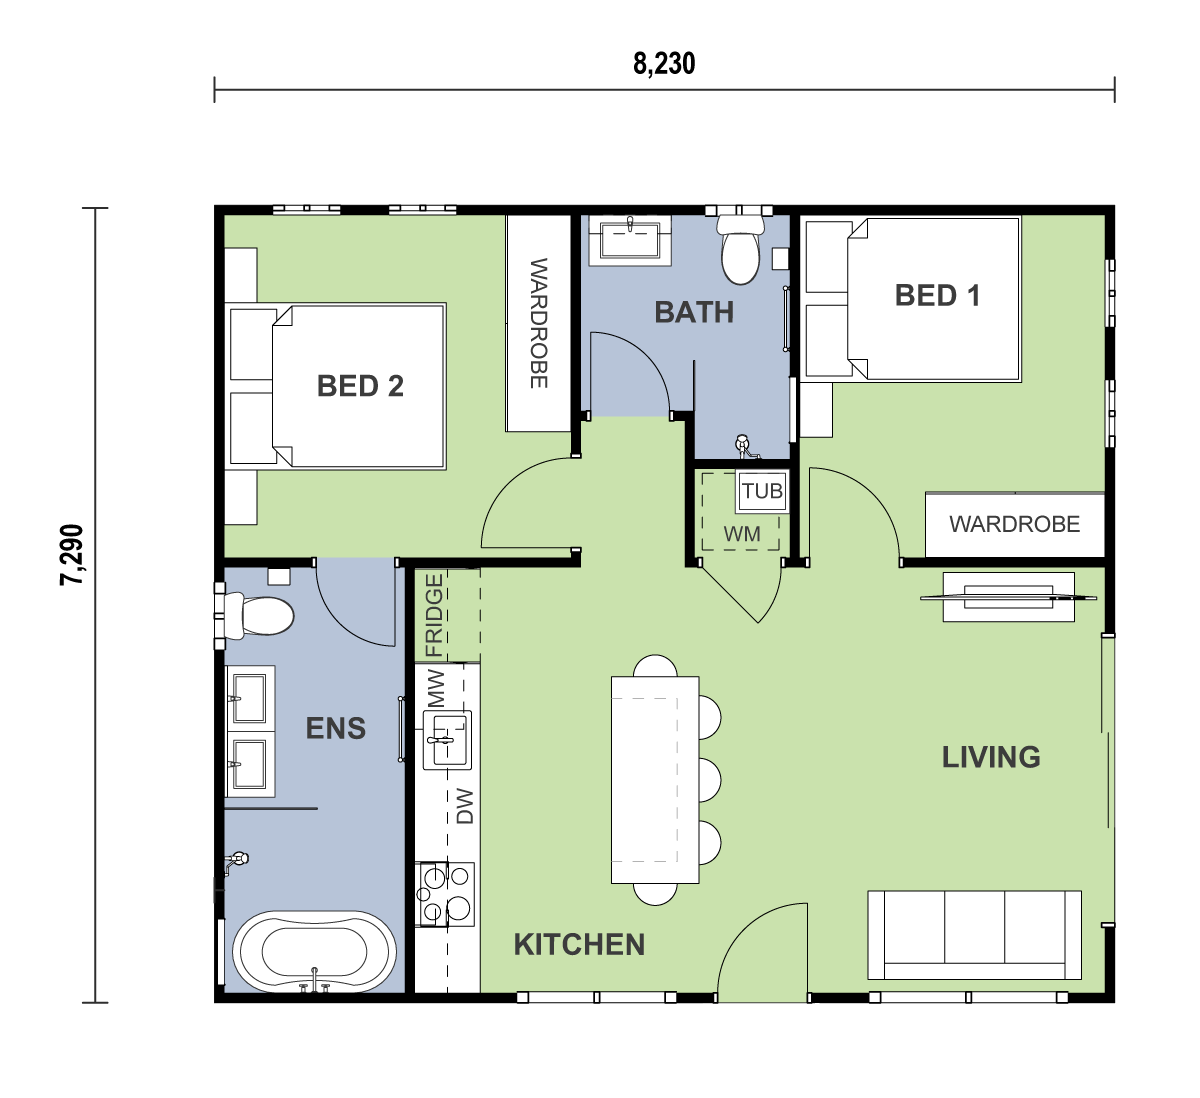 2 bedroom 2 bathroom granny flat floor plan